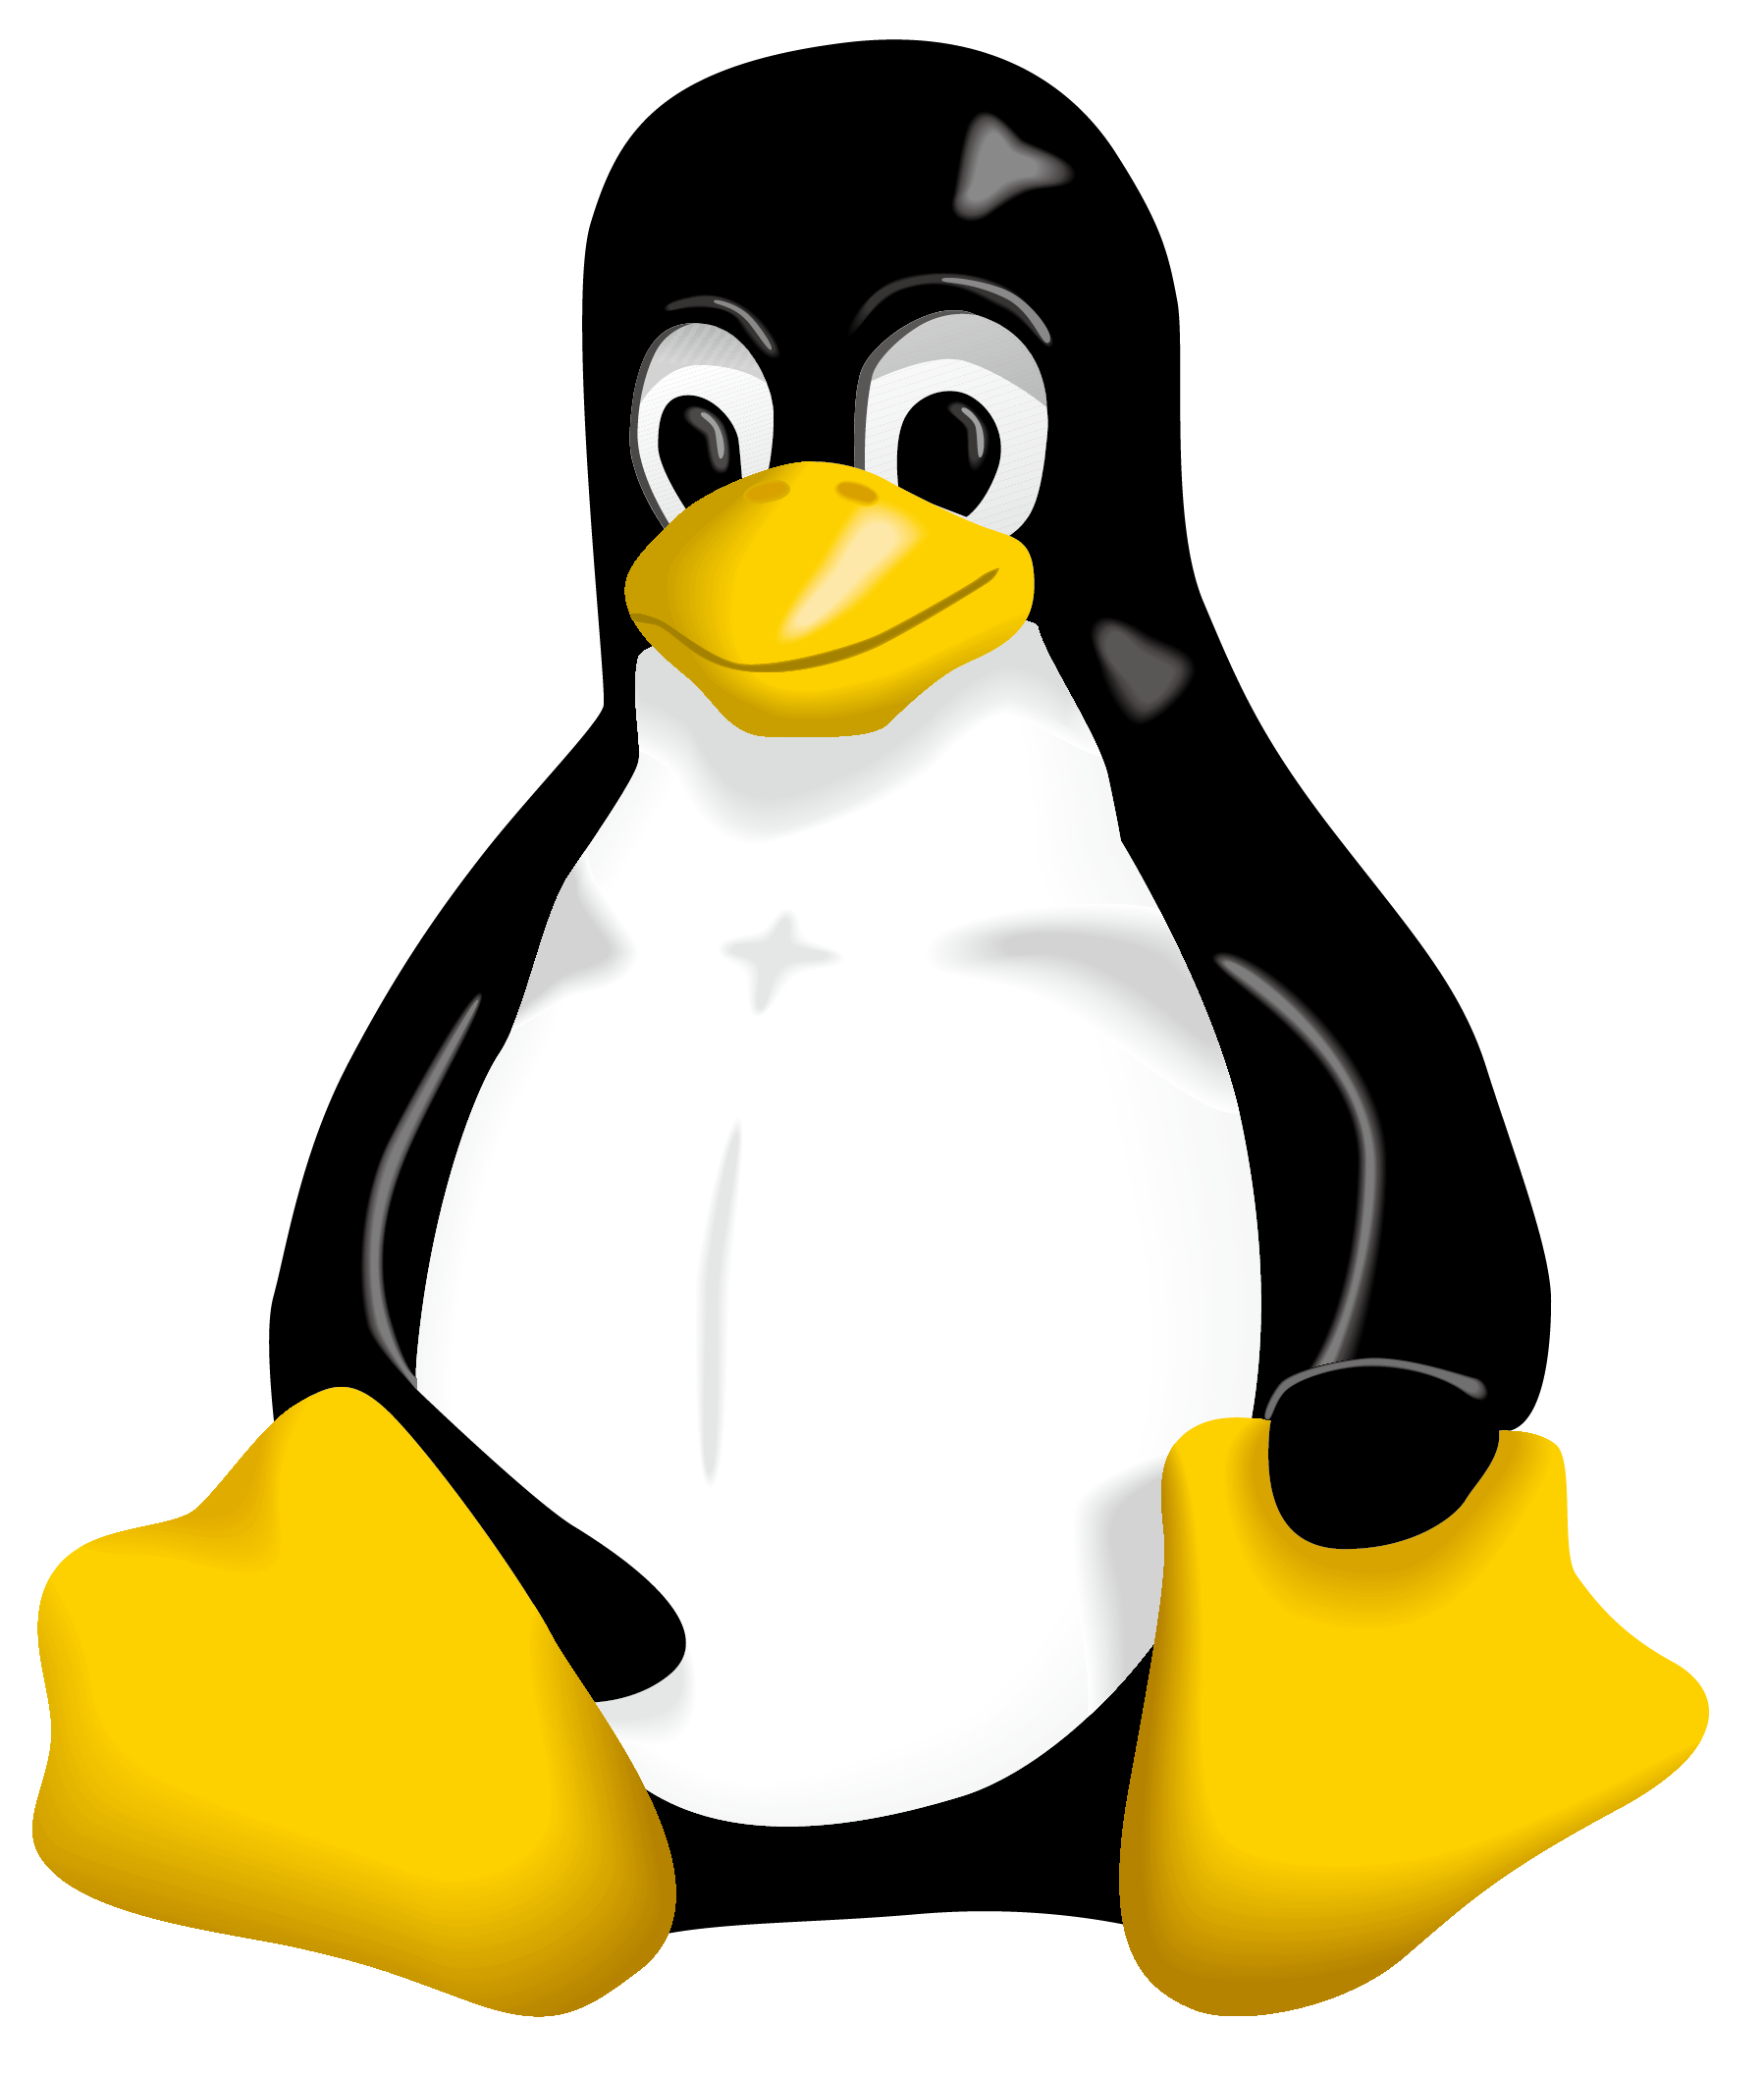 Linux_Penguin_logo-转换--01